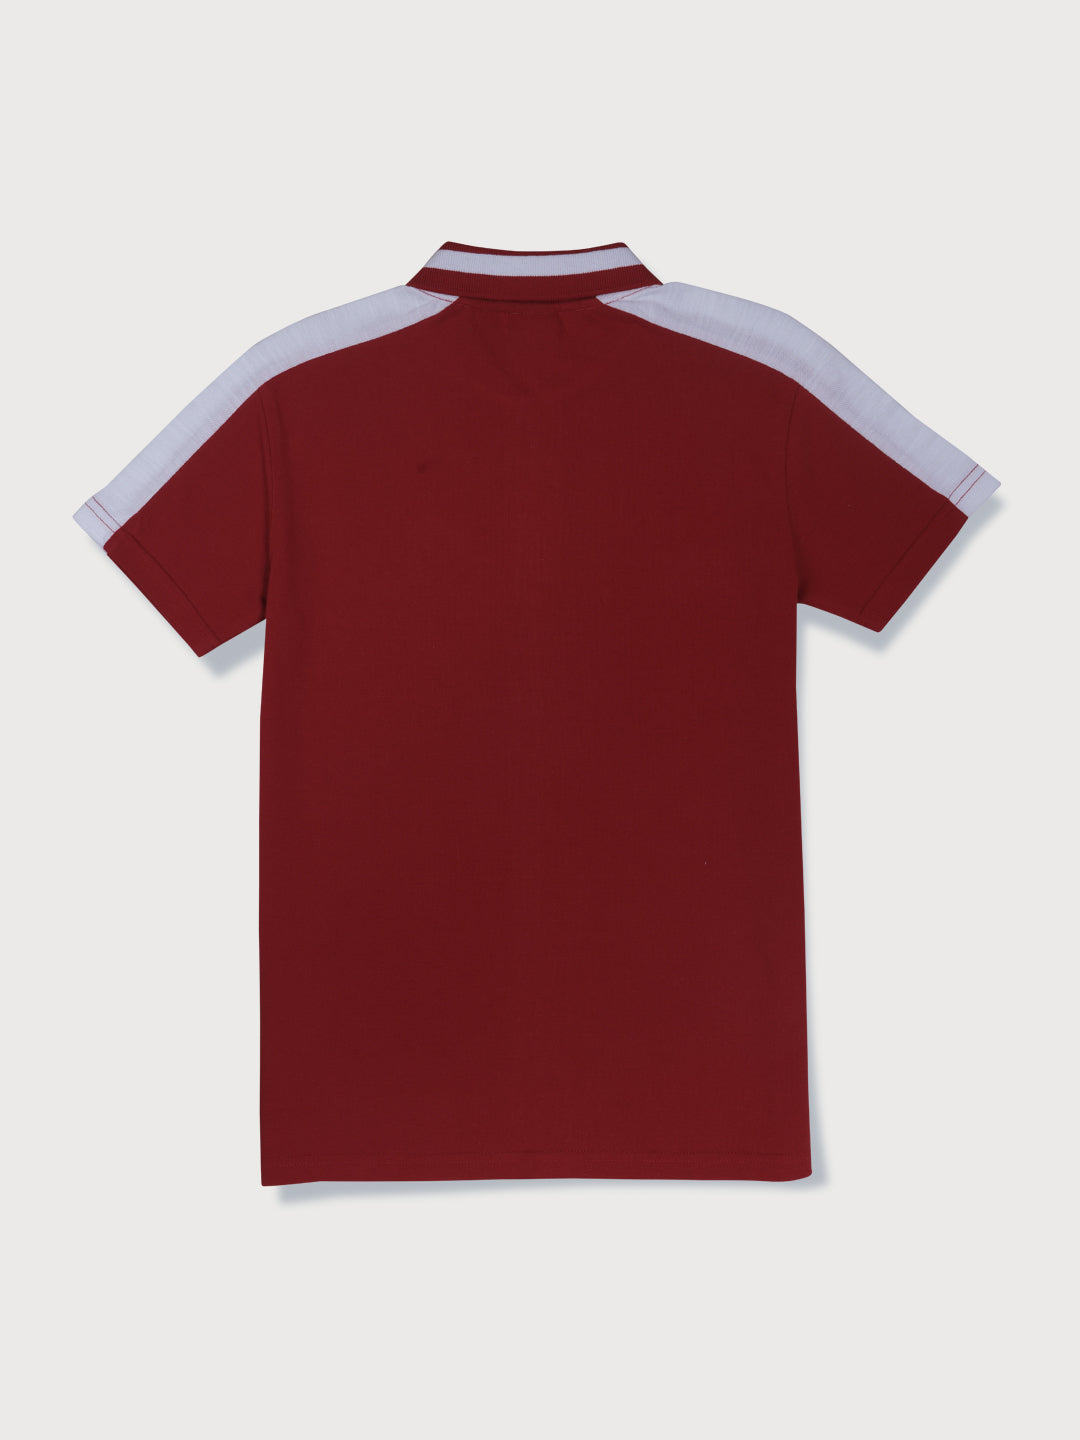 Boys Red Colourblock Knits Polo T-Shirt